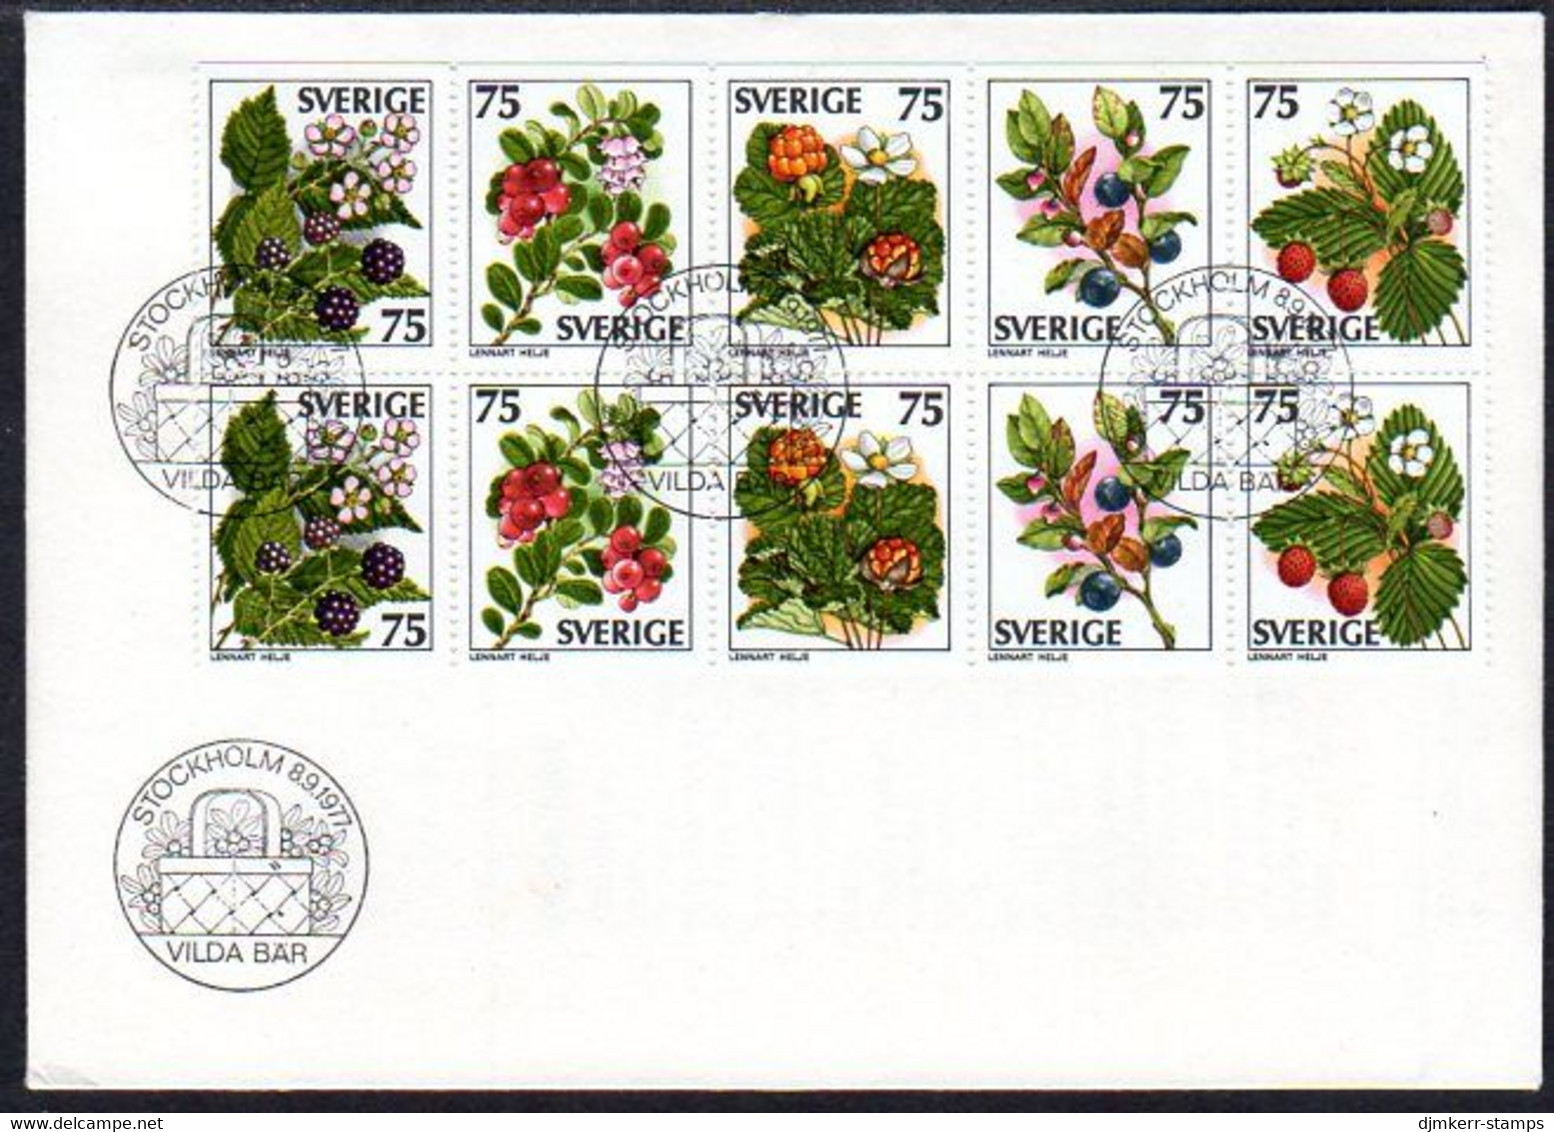 SWEDEN 1977 Wild Berries FDC.  Michel 994-98 - FDC